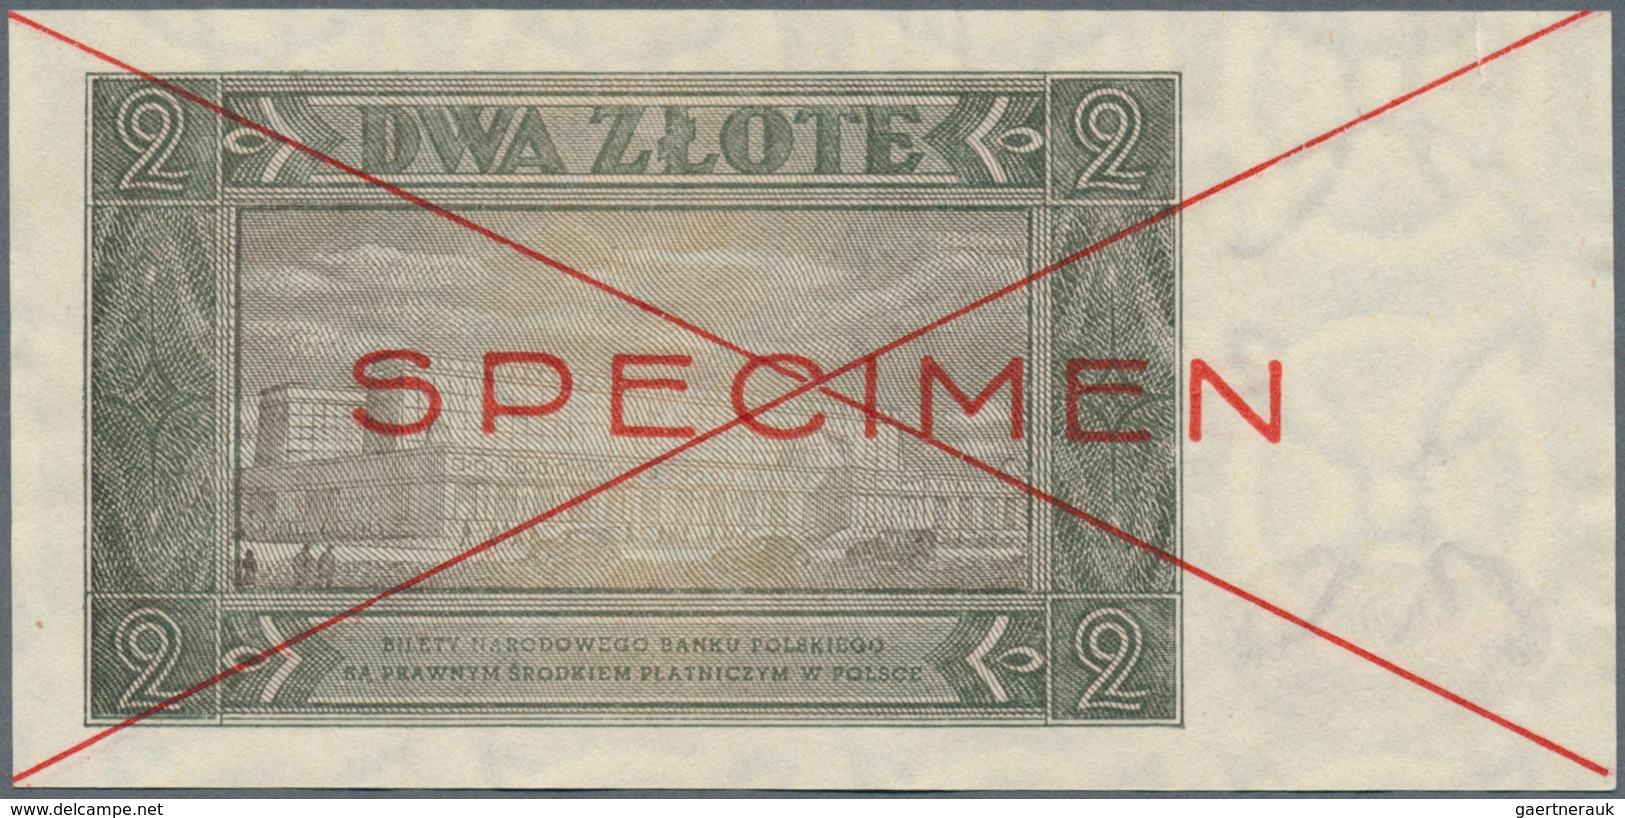 02210 Poland / Polen: 2 Zlotych 1948 SPECIMEN P. 134s, Wavy Paper But Still Crispness, Original Colors, Co - Polonia